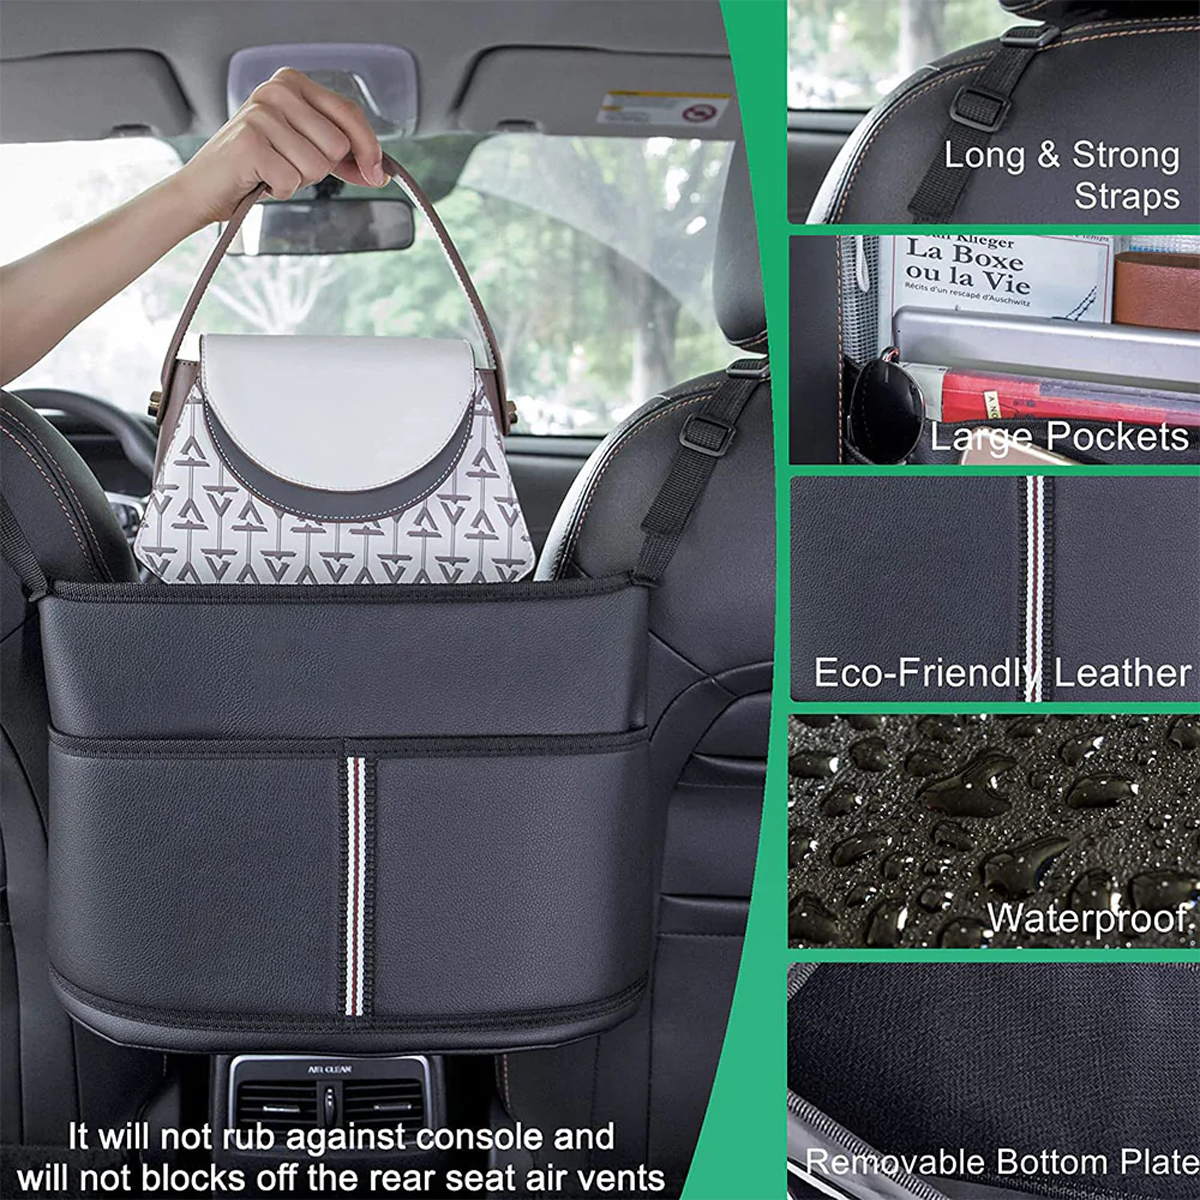 Car Purse Holder for Car Handbag Holder Between Seats Premium PU Leather, Custom Fit For Car, Hanging Car Purse Storage Pocket Back Seat Pet Barrier DLFD223